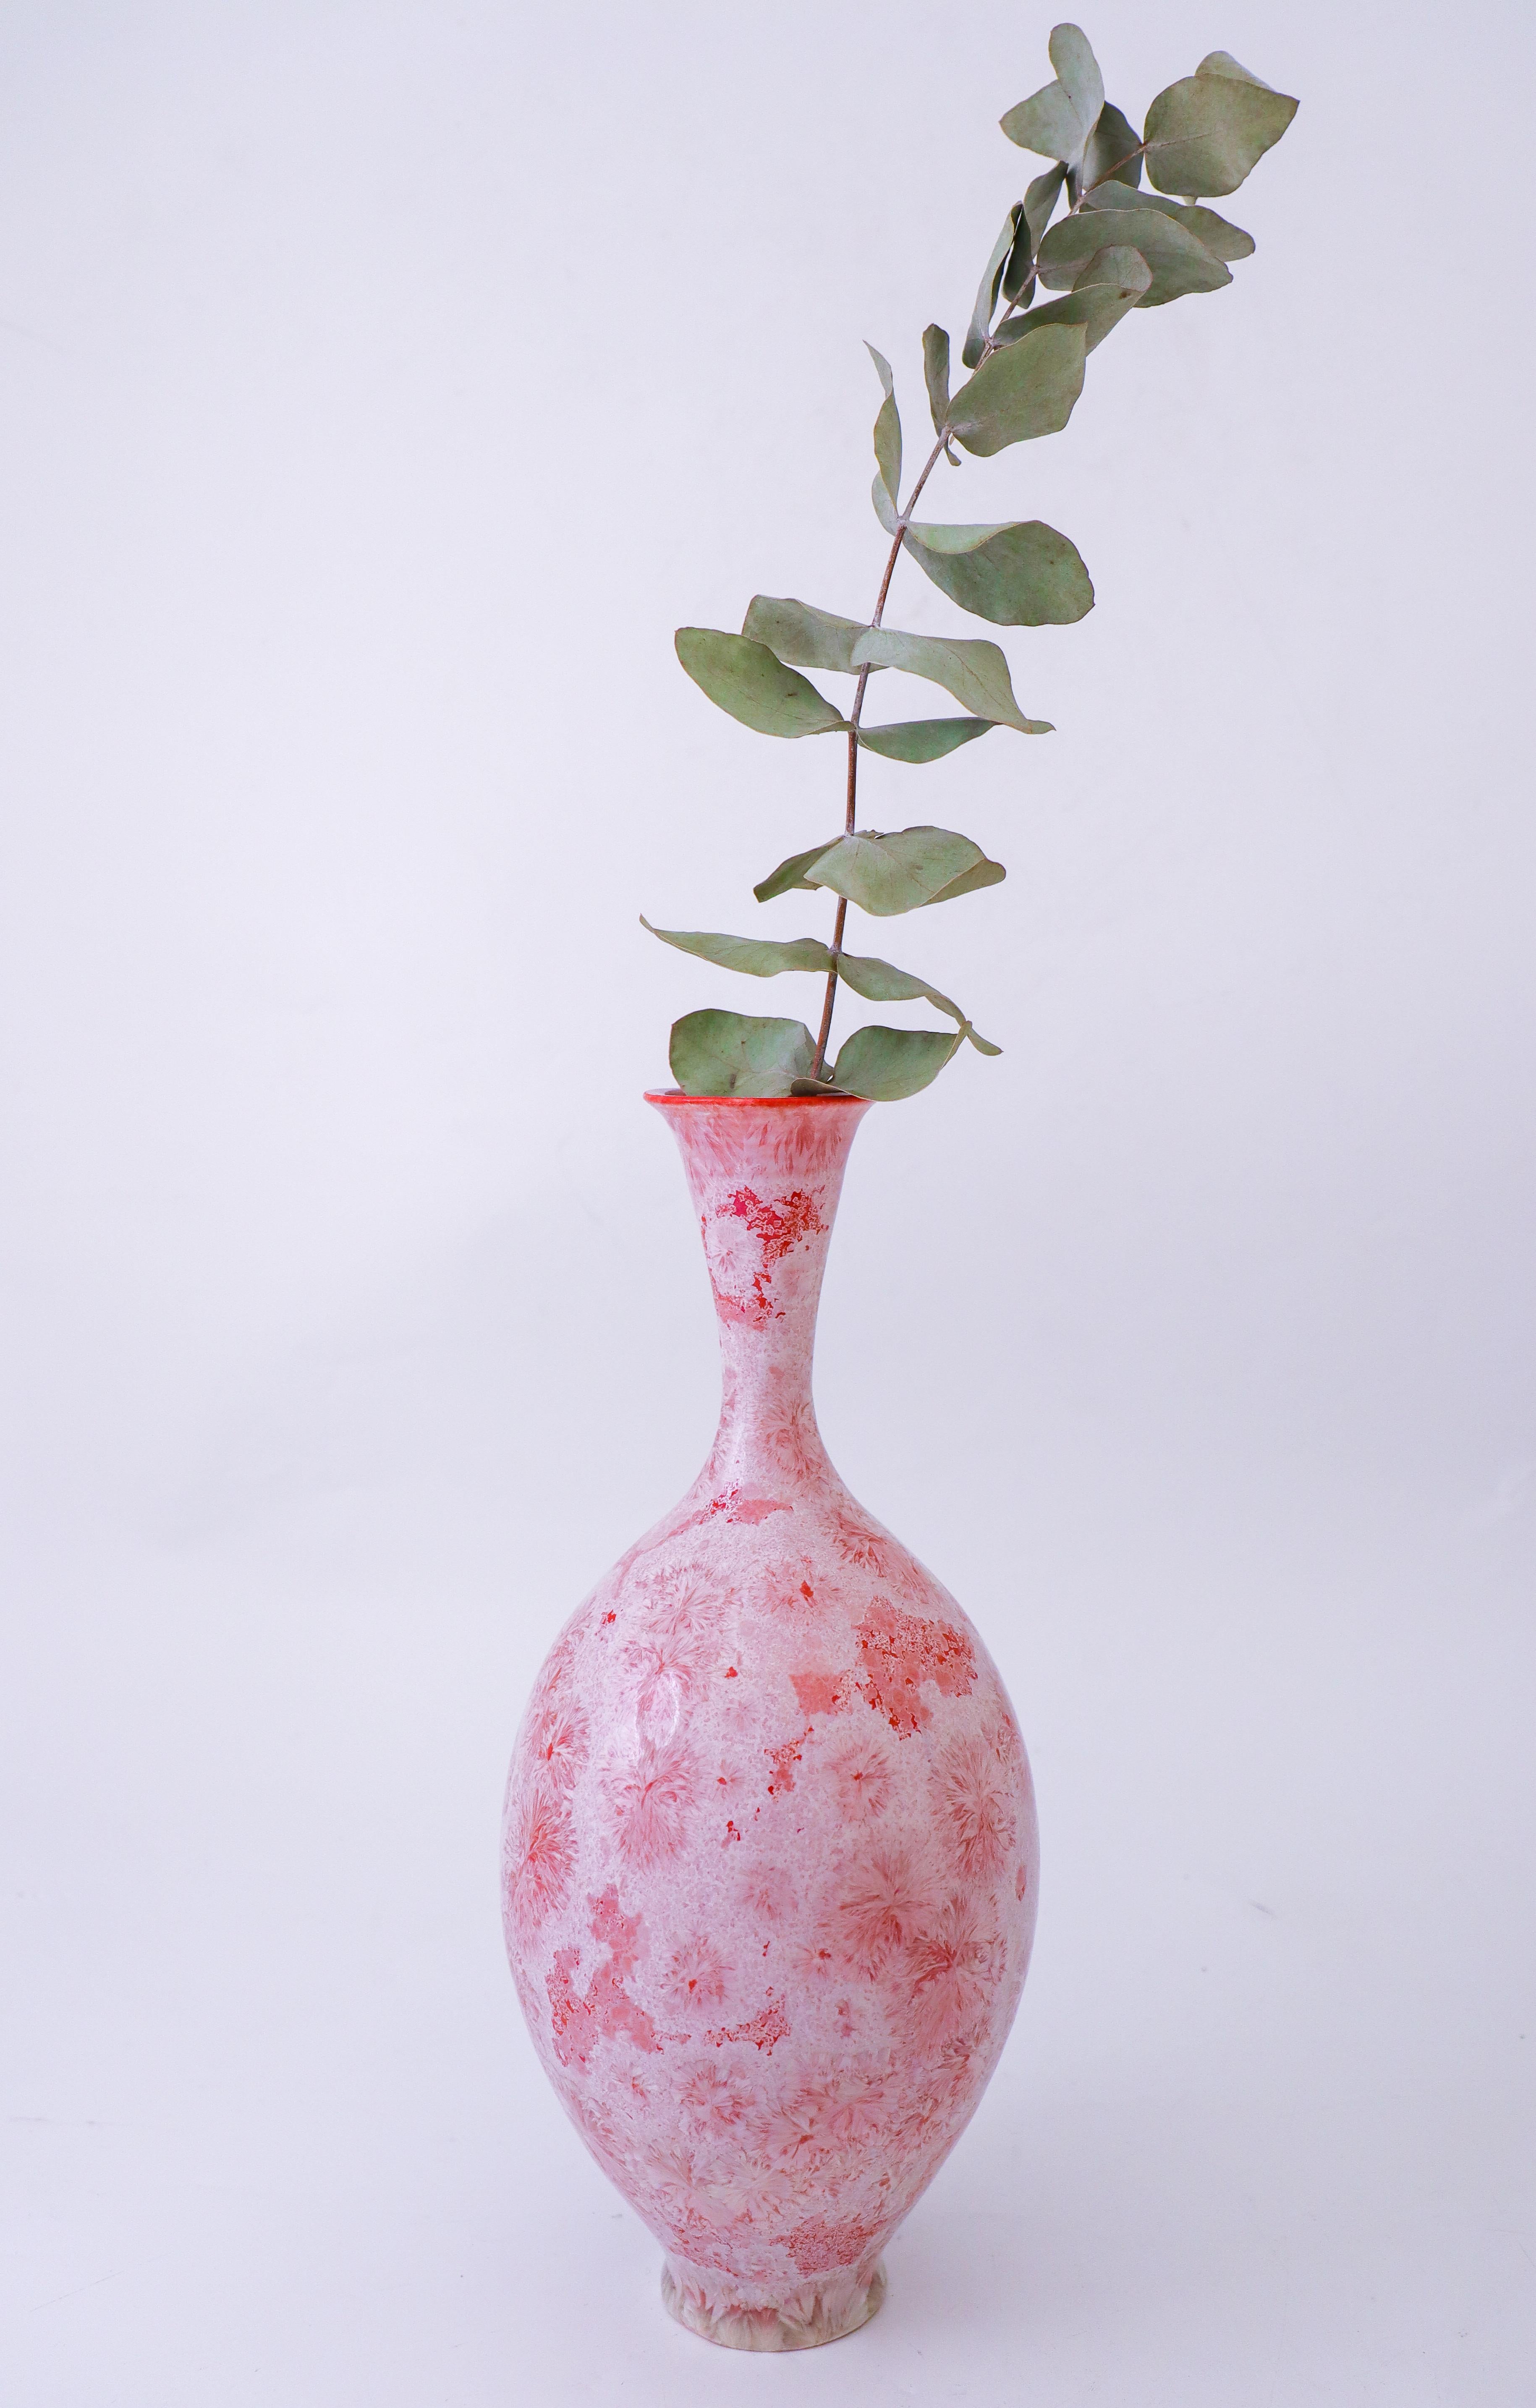 Glazed Isak Isaksson Red & White Ceramic Vase Crystalline Glaze Contemporary Christmas For Sale